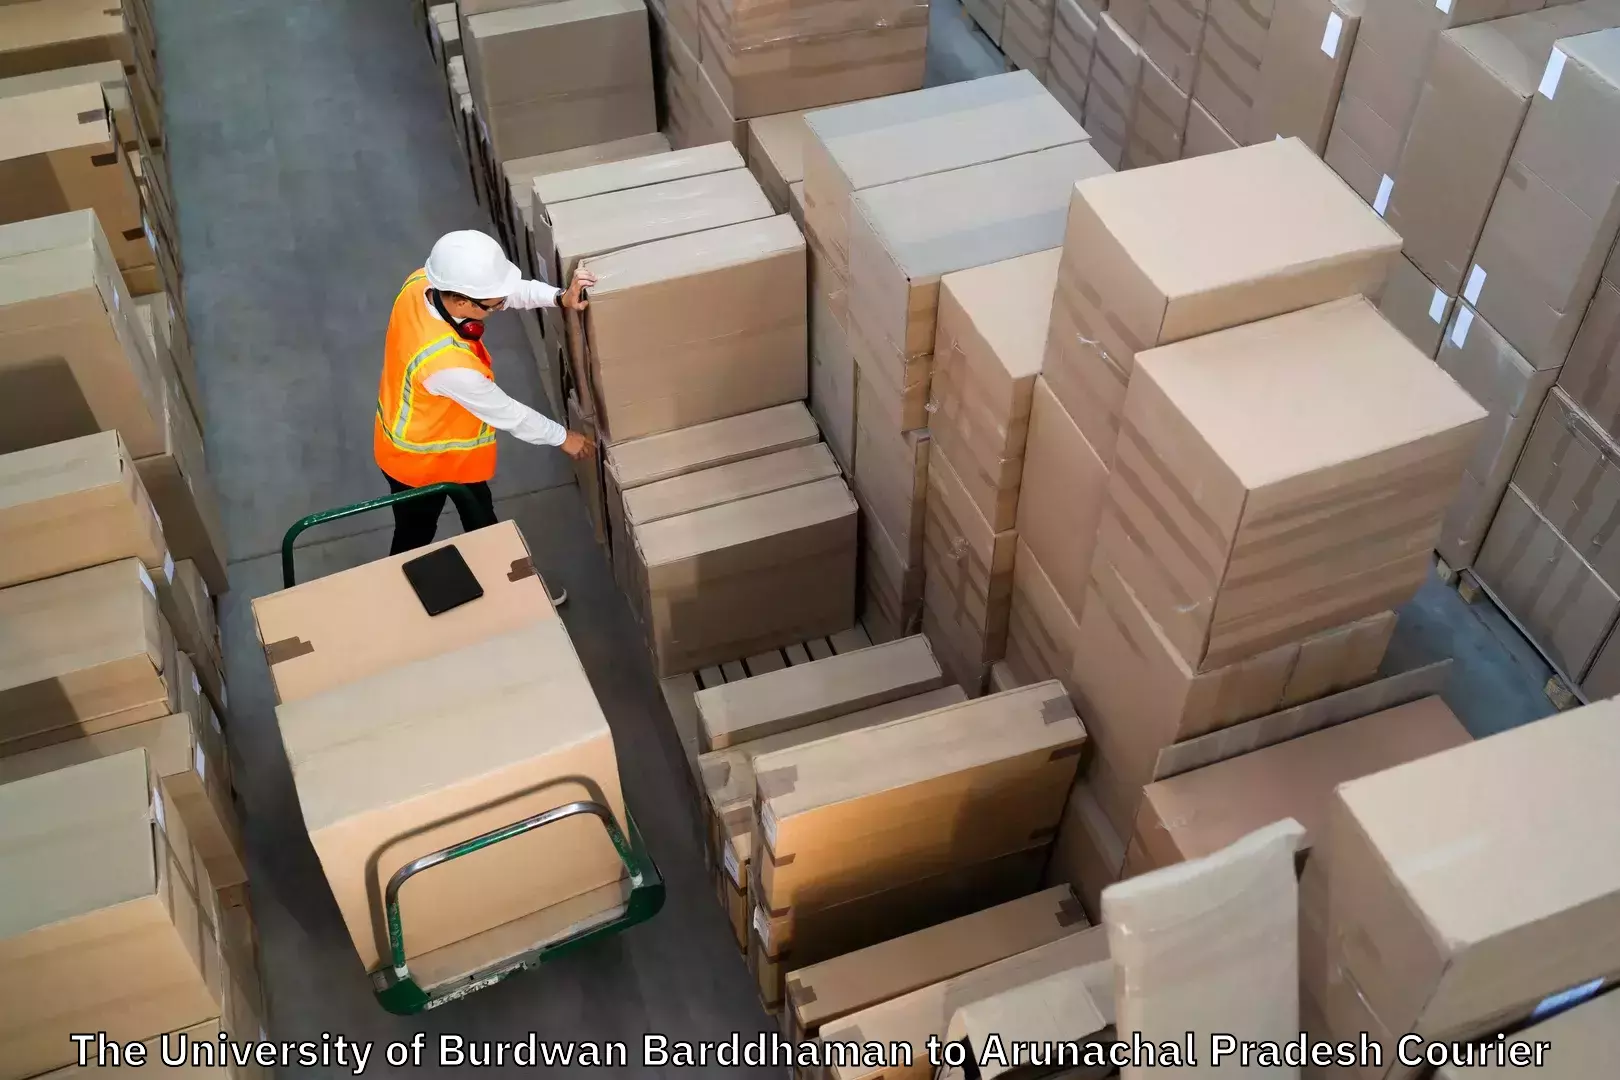 Baggage relocation service The University of Burdwan Barddhaman to Itanagar